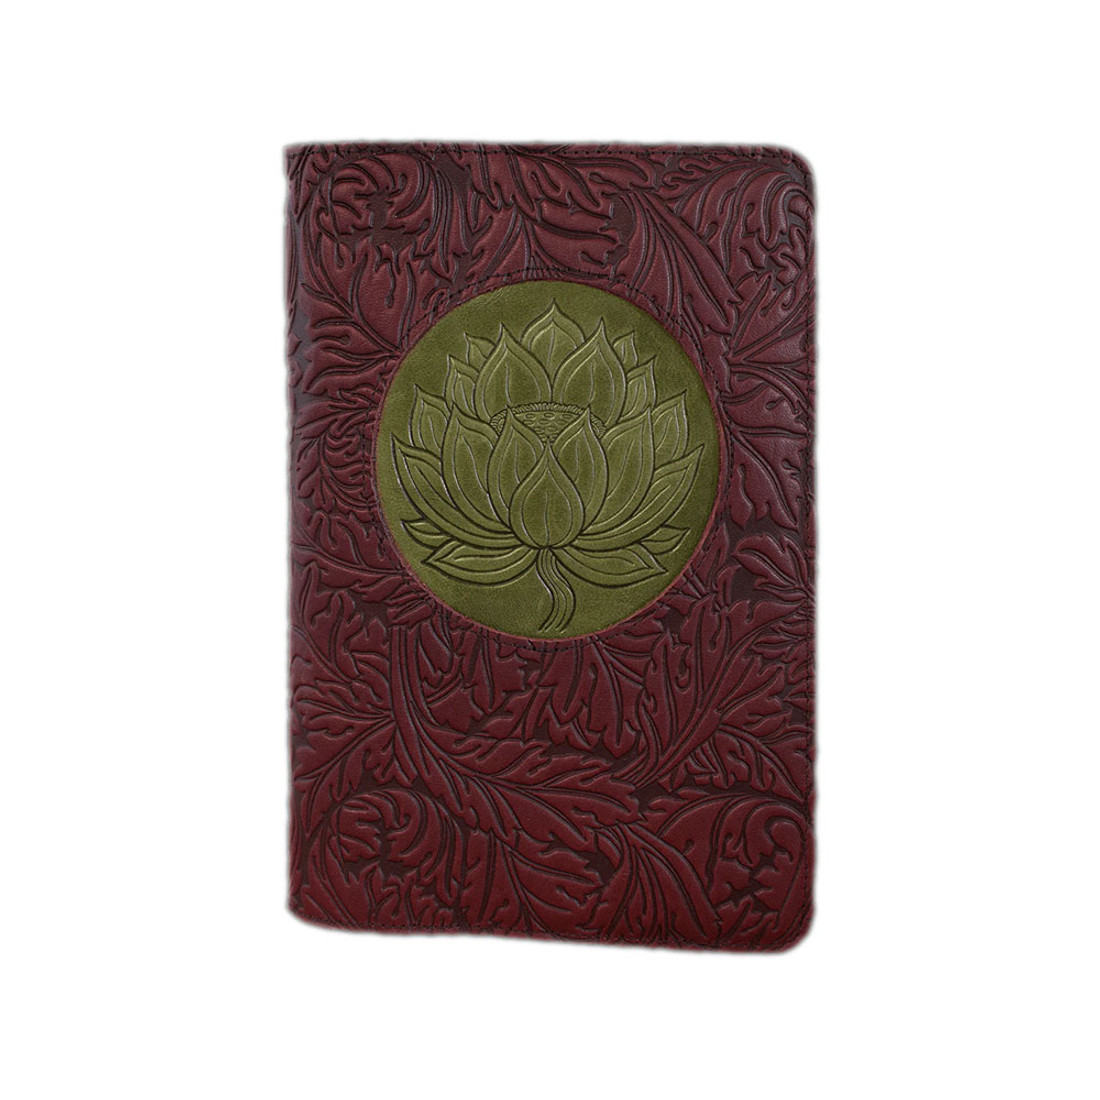 Lotus flower leather journal.